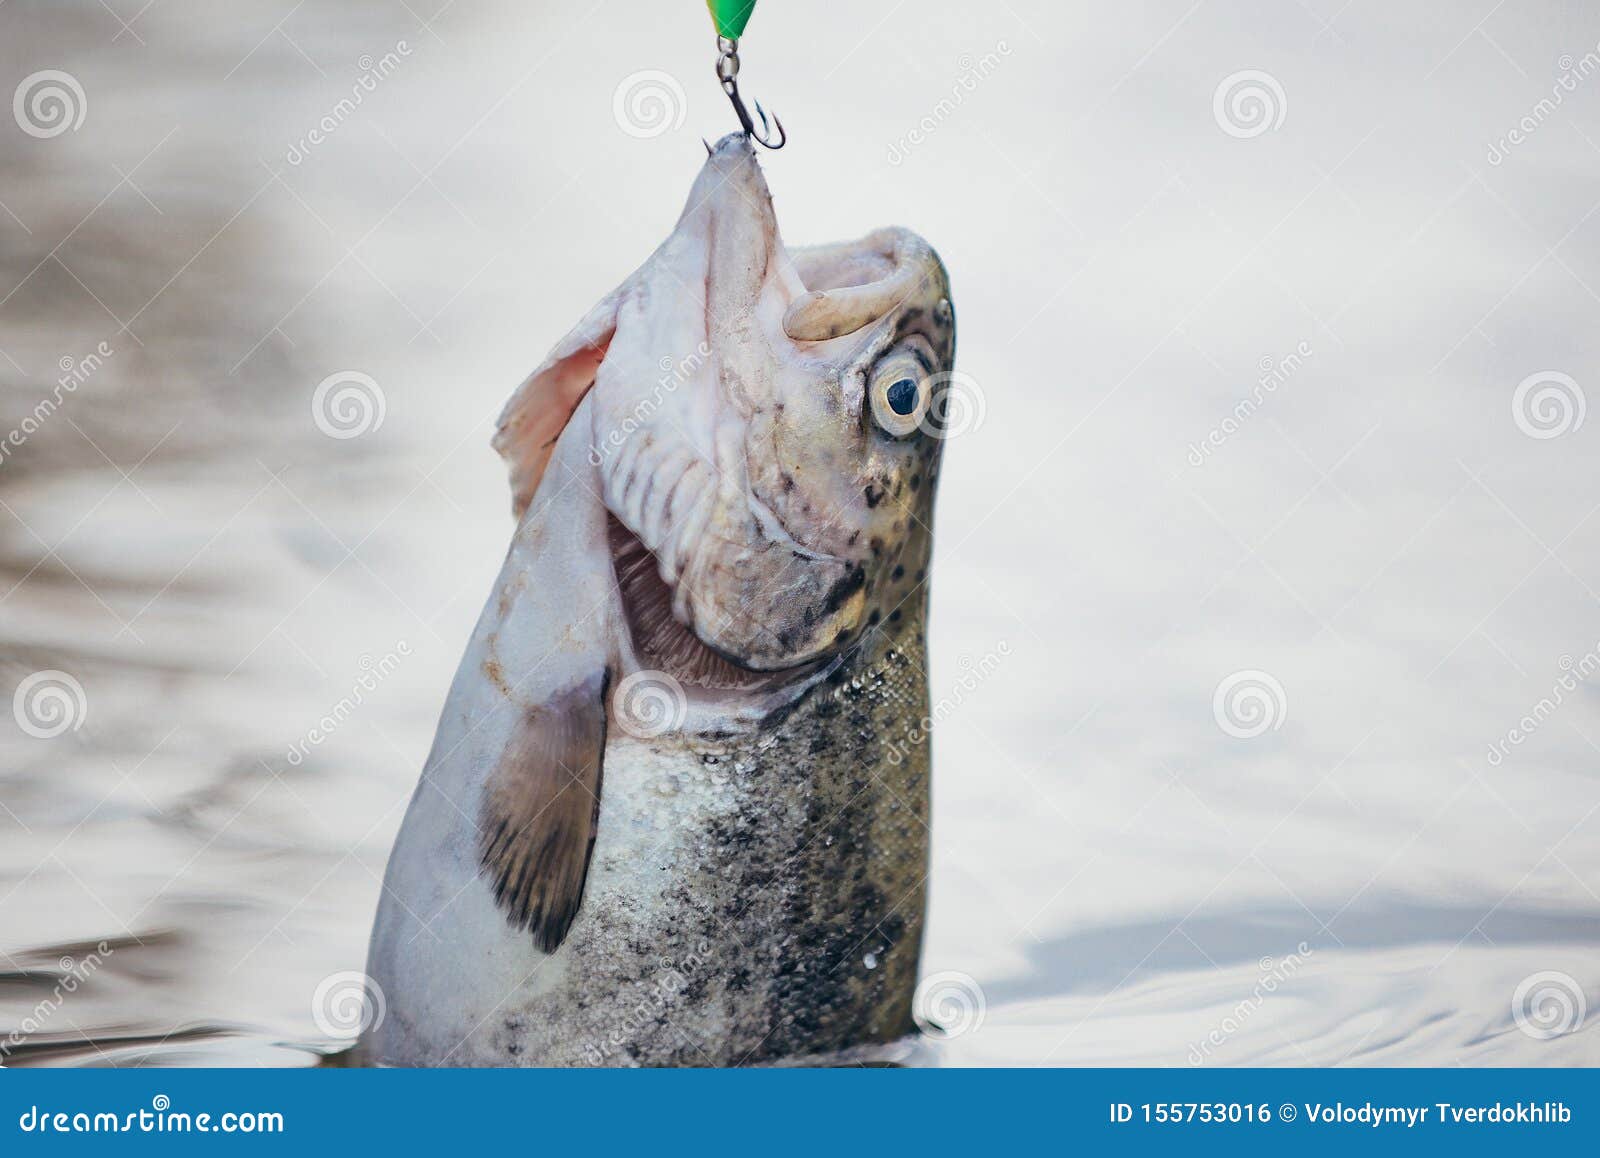 https://thumbs.dreamstime.com/z/catching-big-fish-fishing-pole-lure-fly-relaxing-enjoying-hobby-155753016.jpg